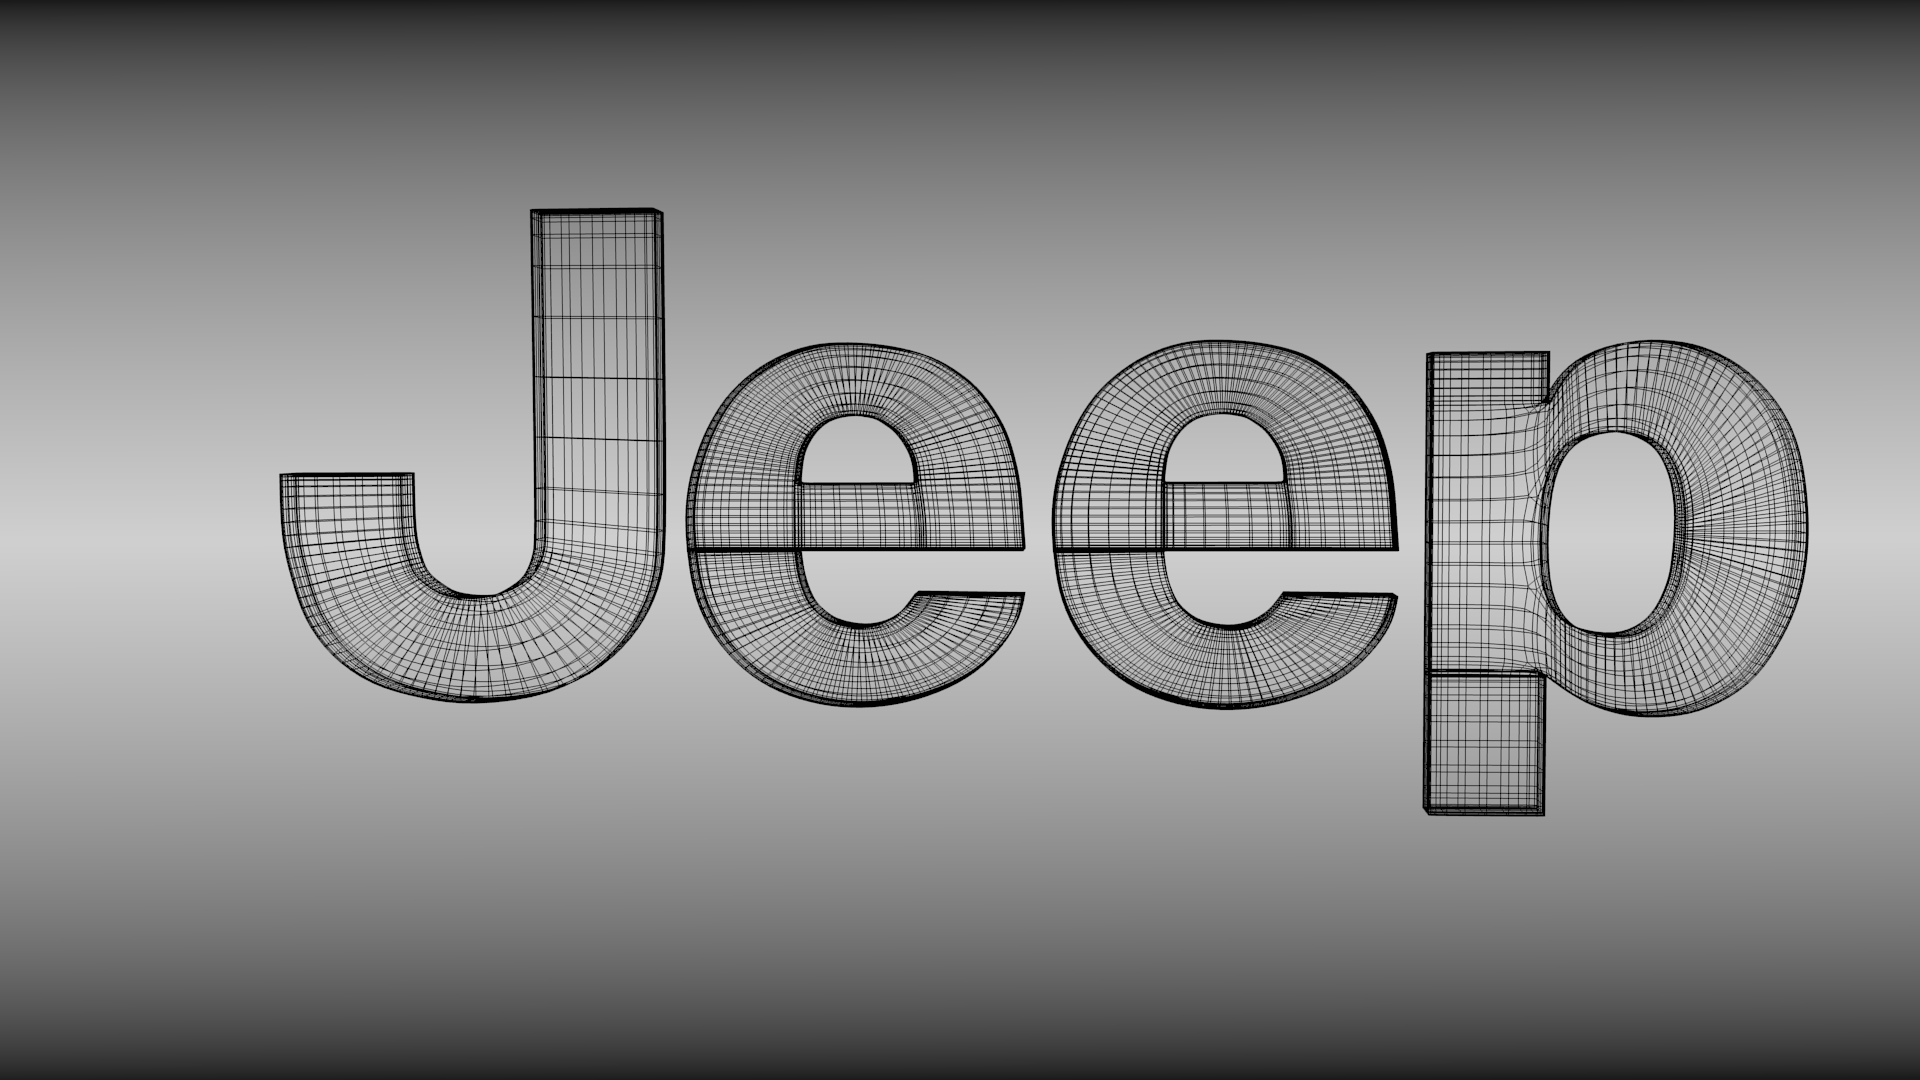 Jeep logo 3D Model .obj .blend